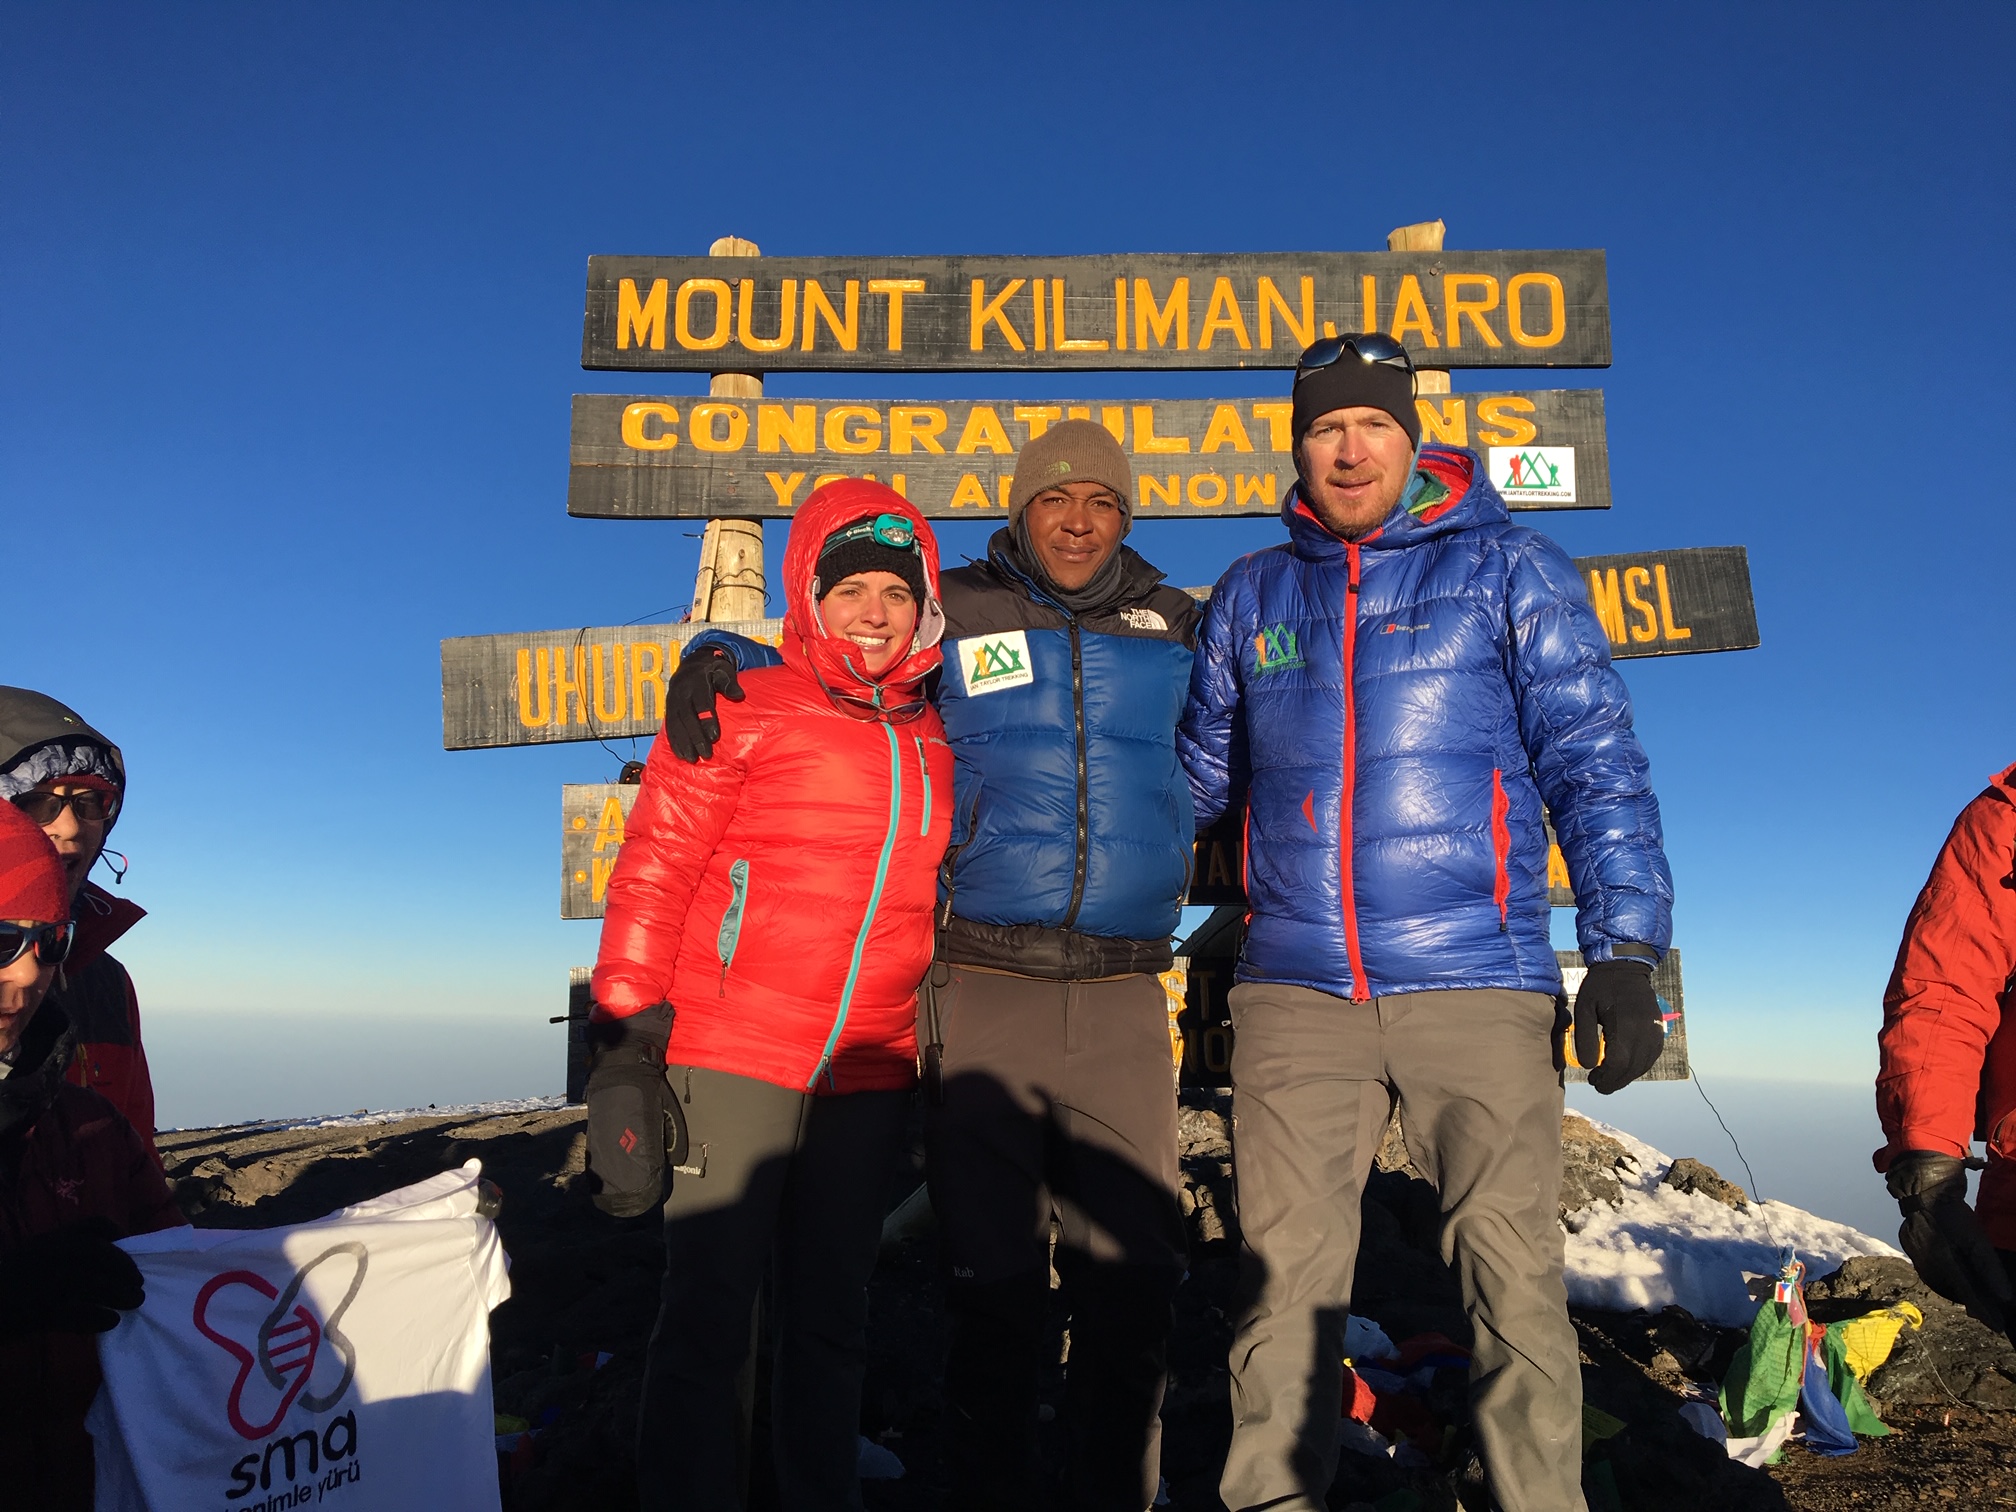 Climb Kilimanjaro with Kili's Number 1 Guide